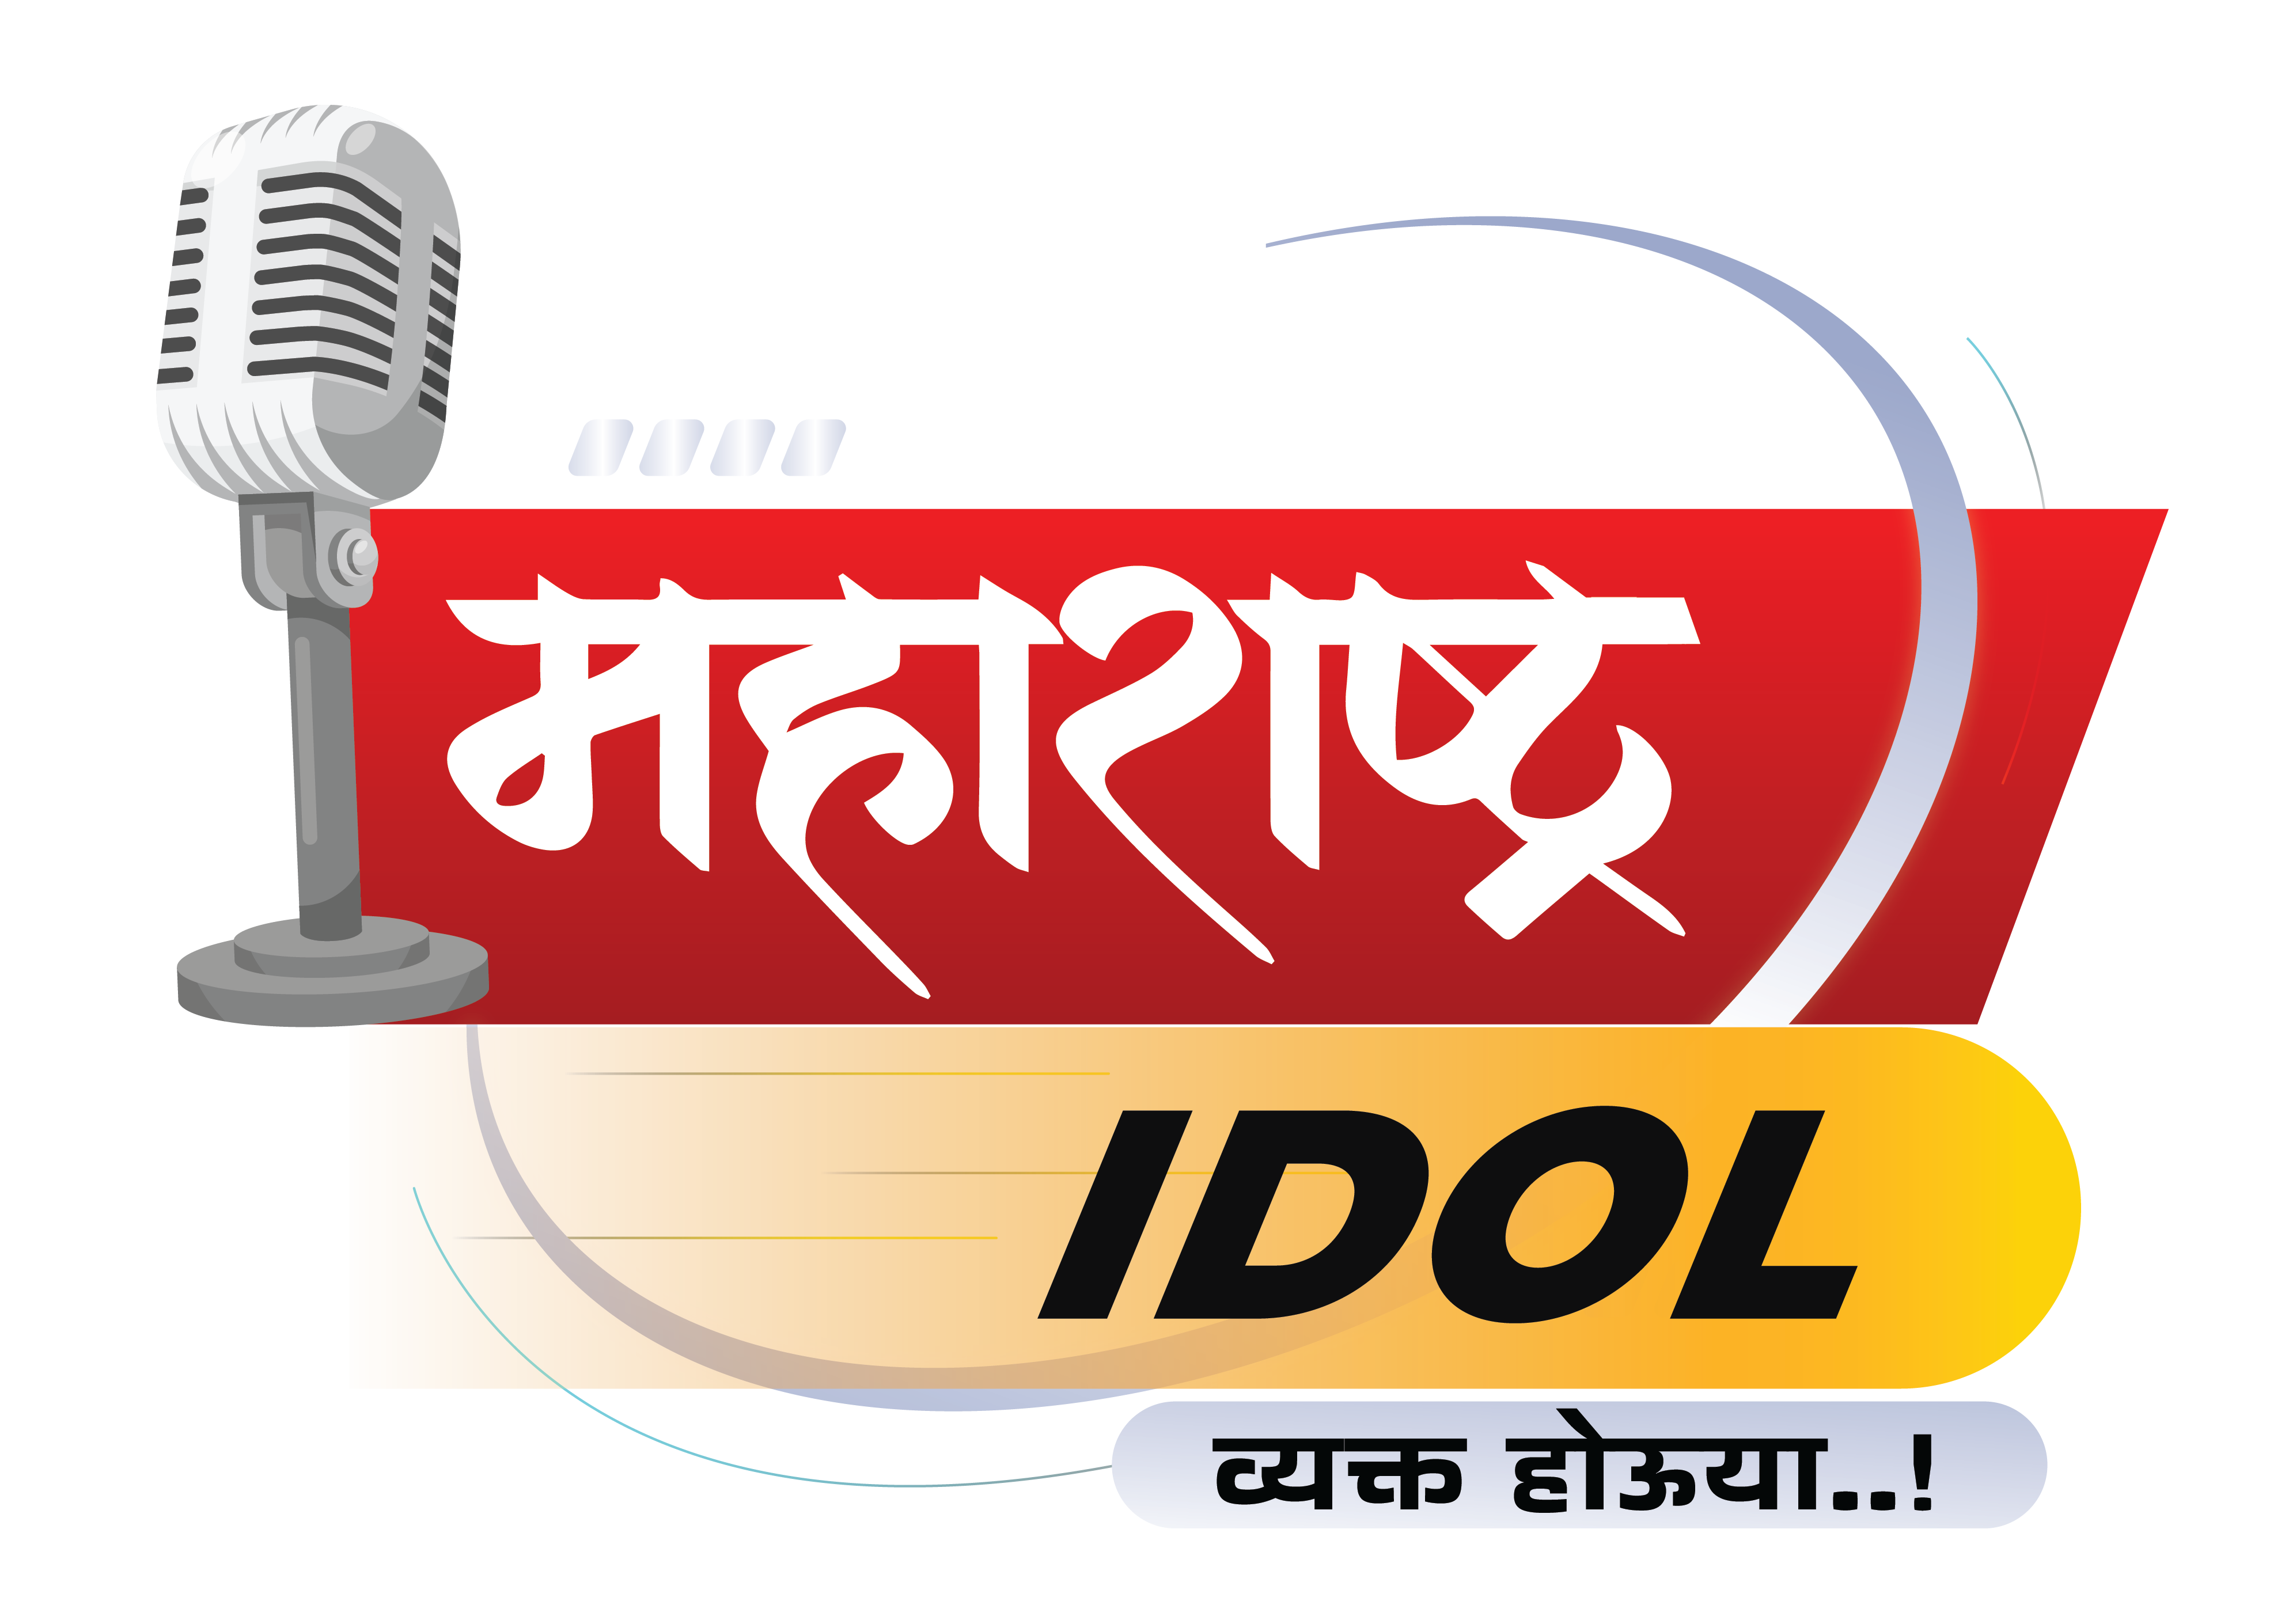 Maharashtra Idol